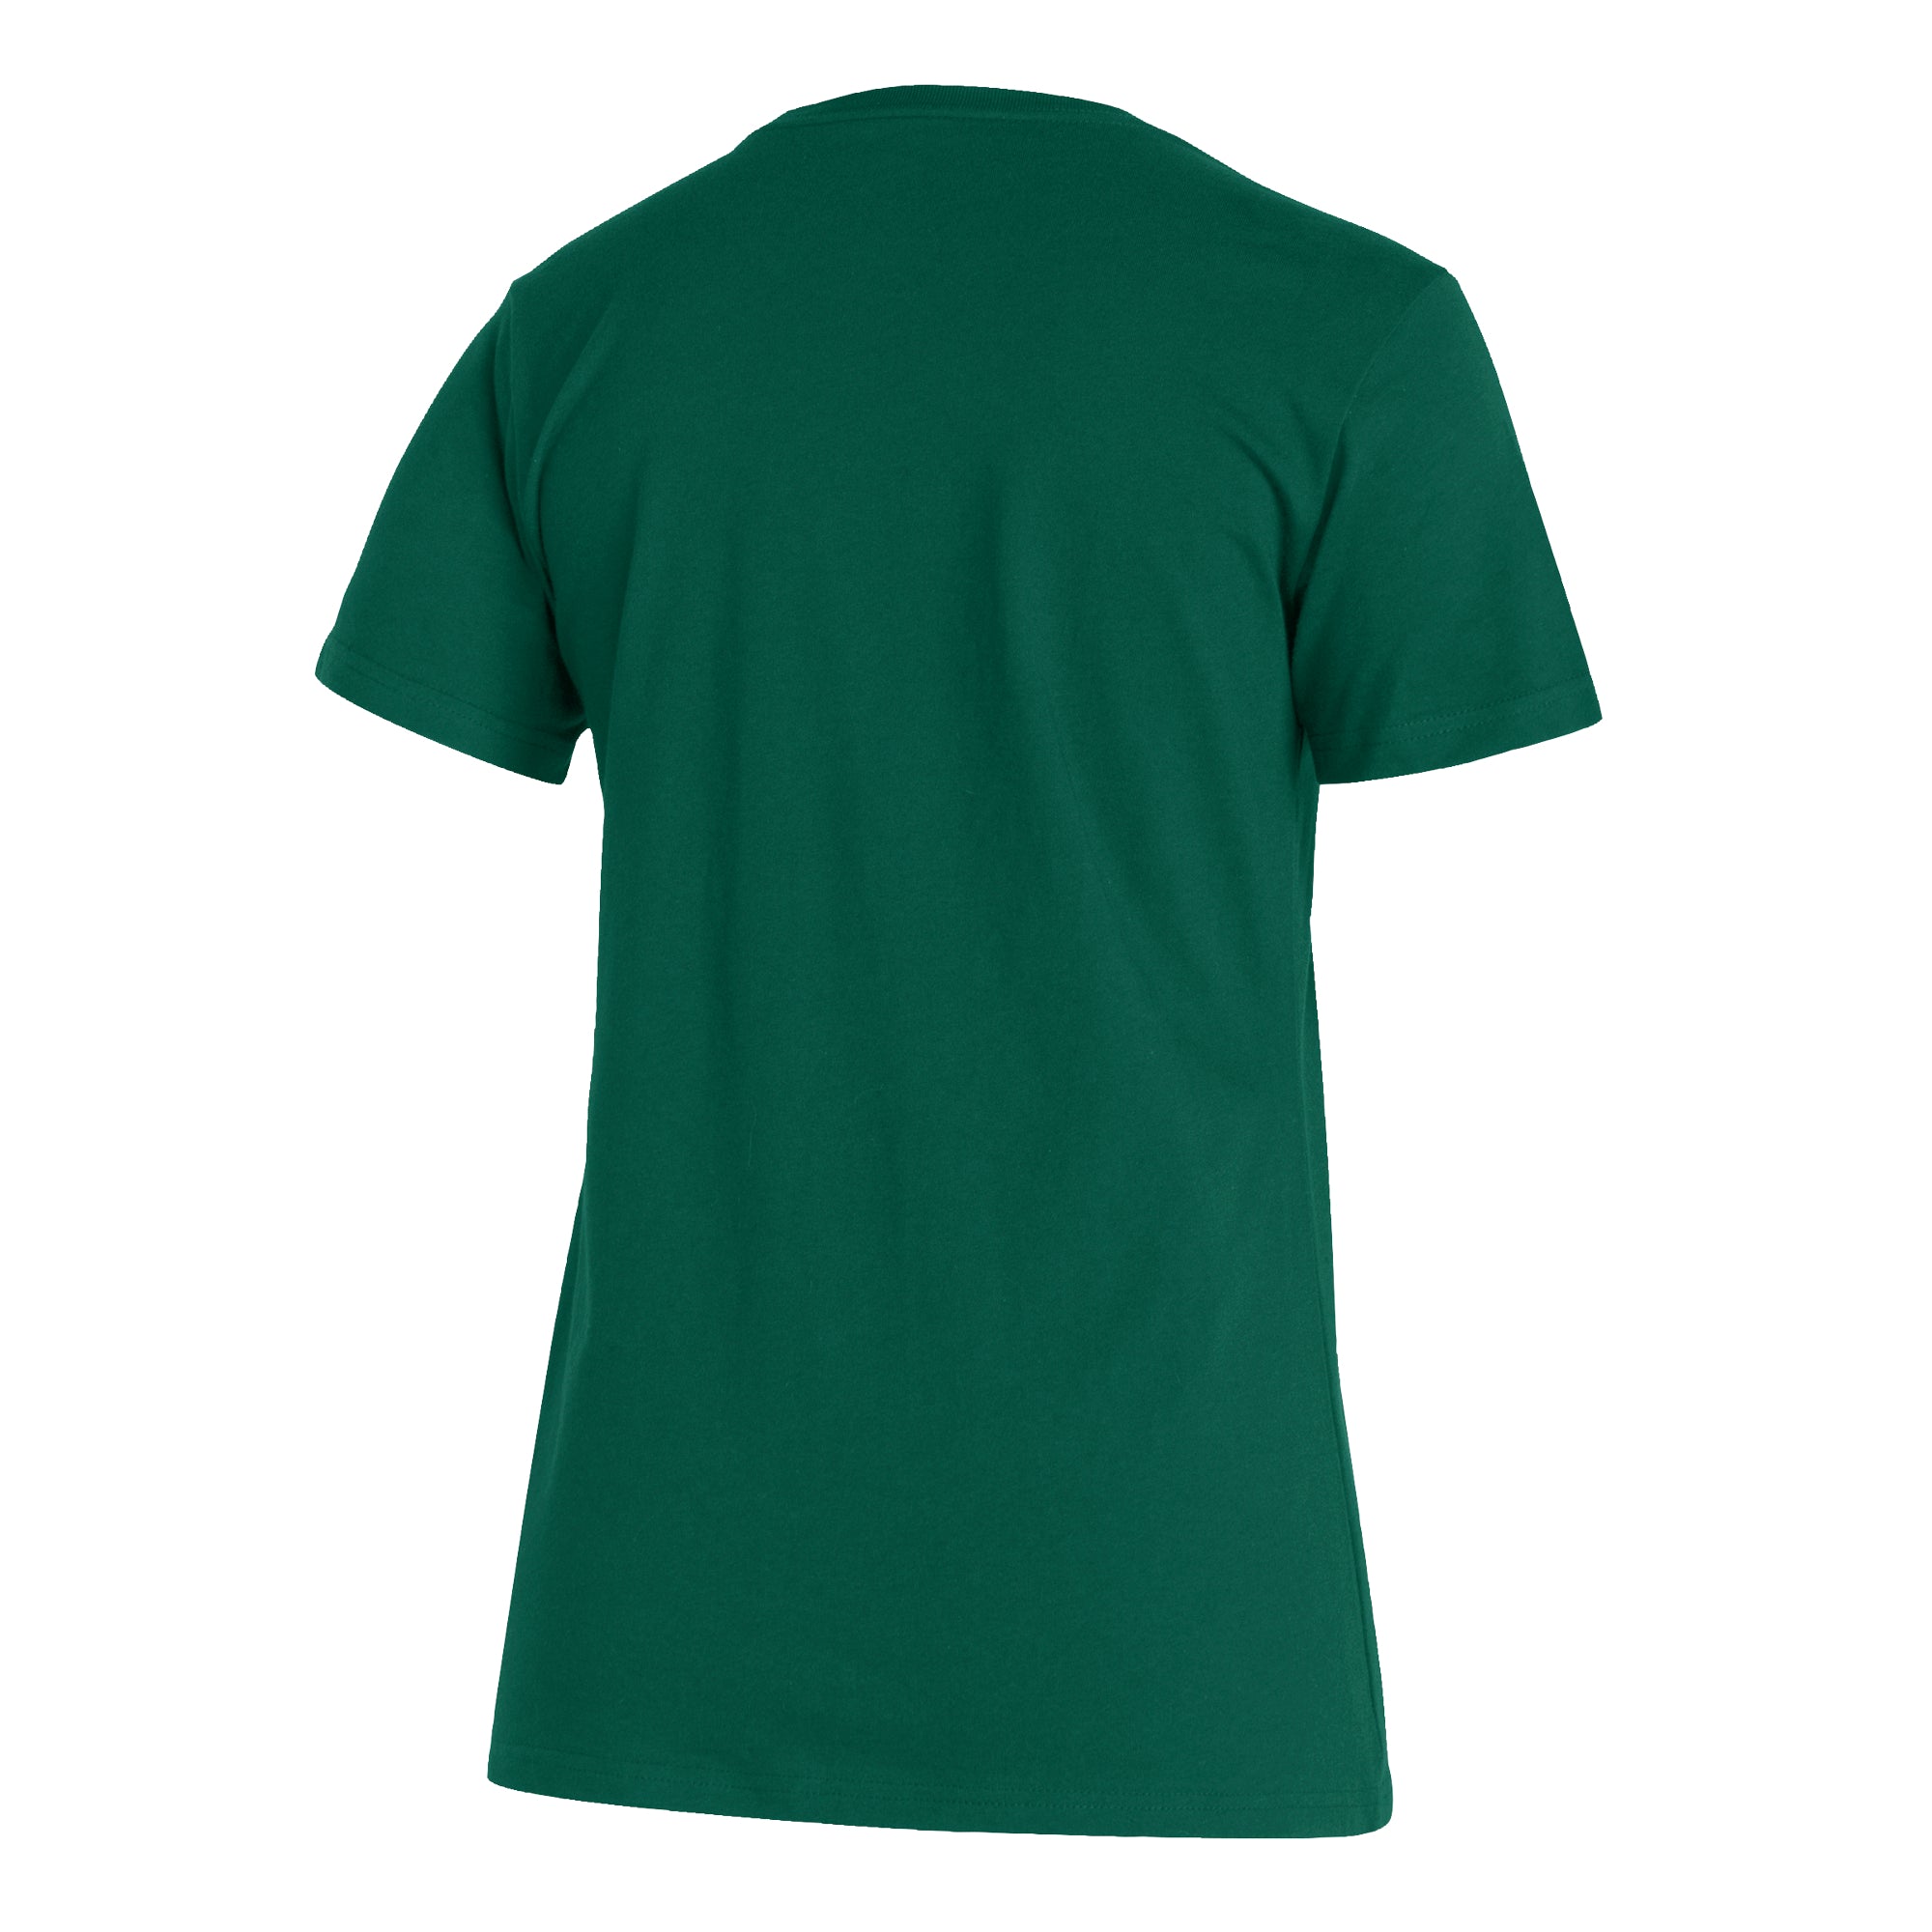 Miami Hurricanes adidas Women's Old English Amplifier T-Shirt - Green